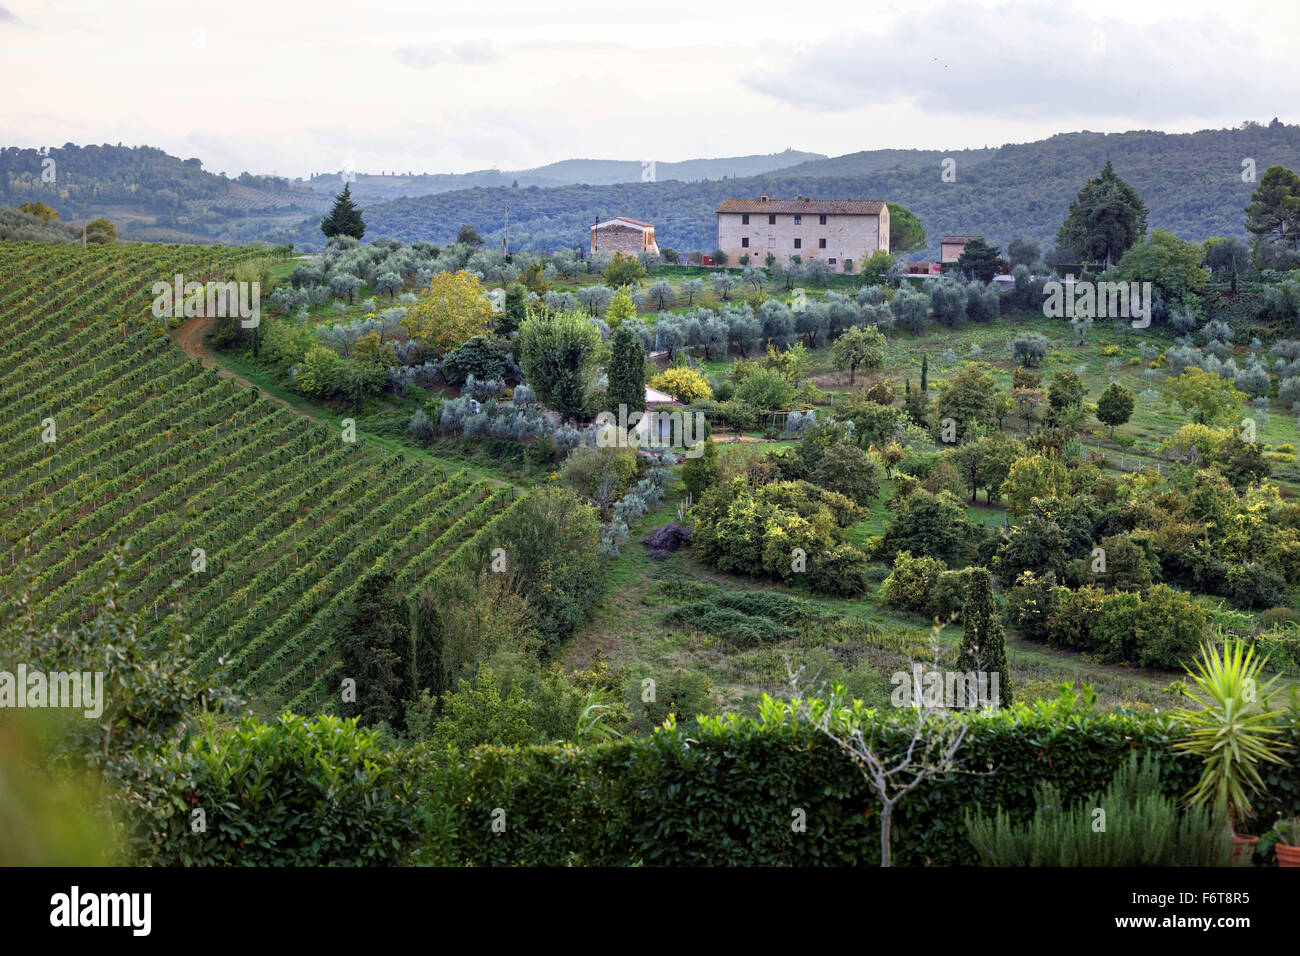 Italy Tuscany Florence wine grapes vineyards Travel tourist tourism Europe vacation Stock Photo